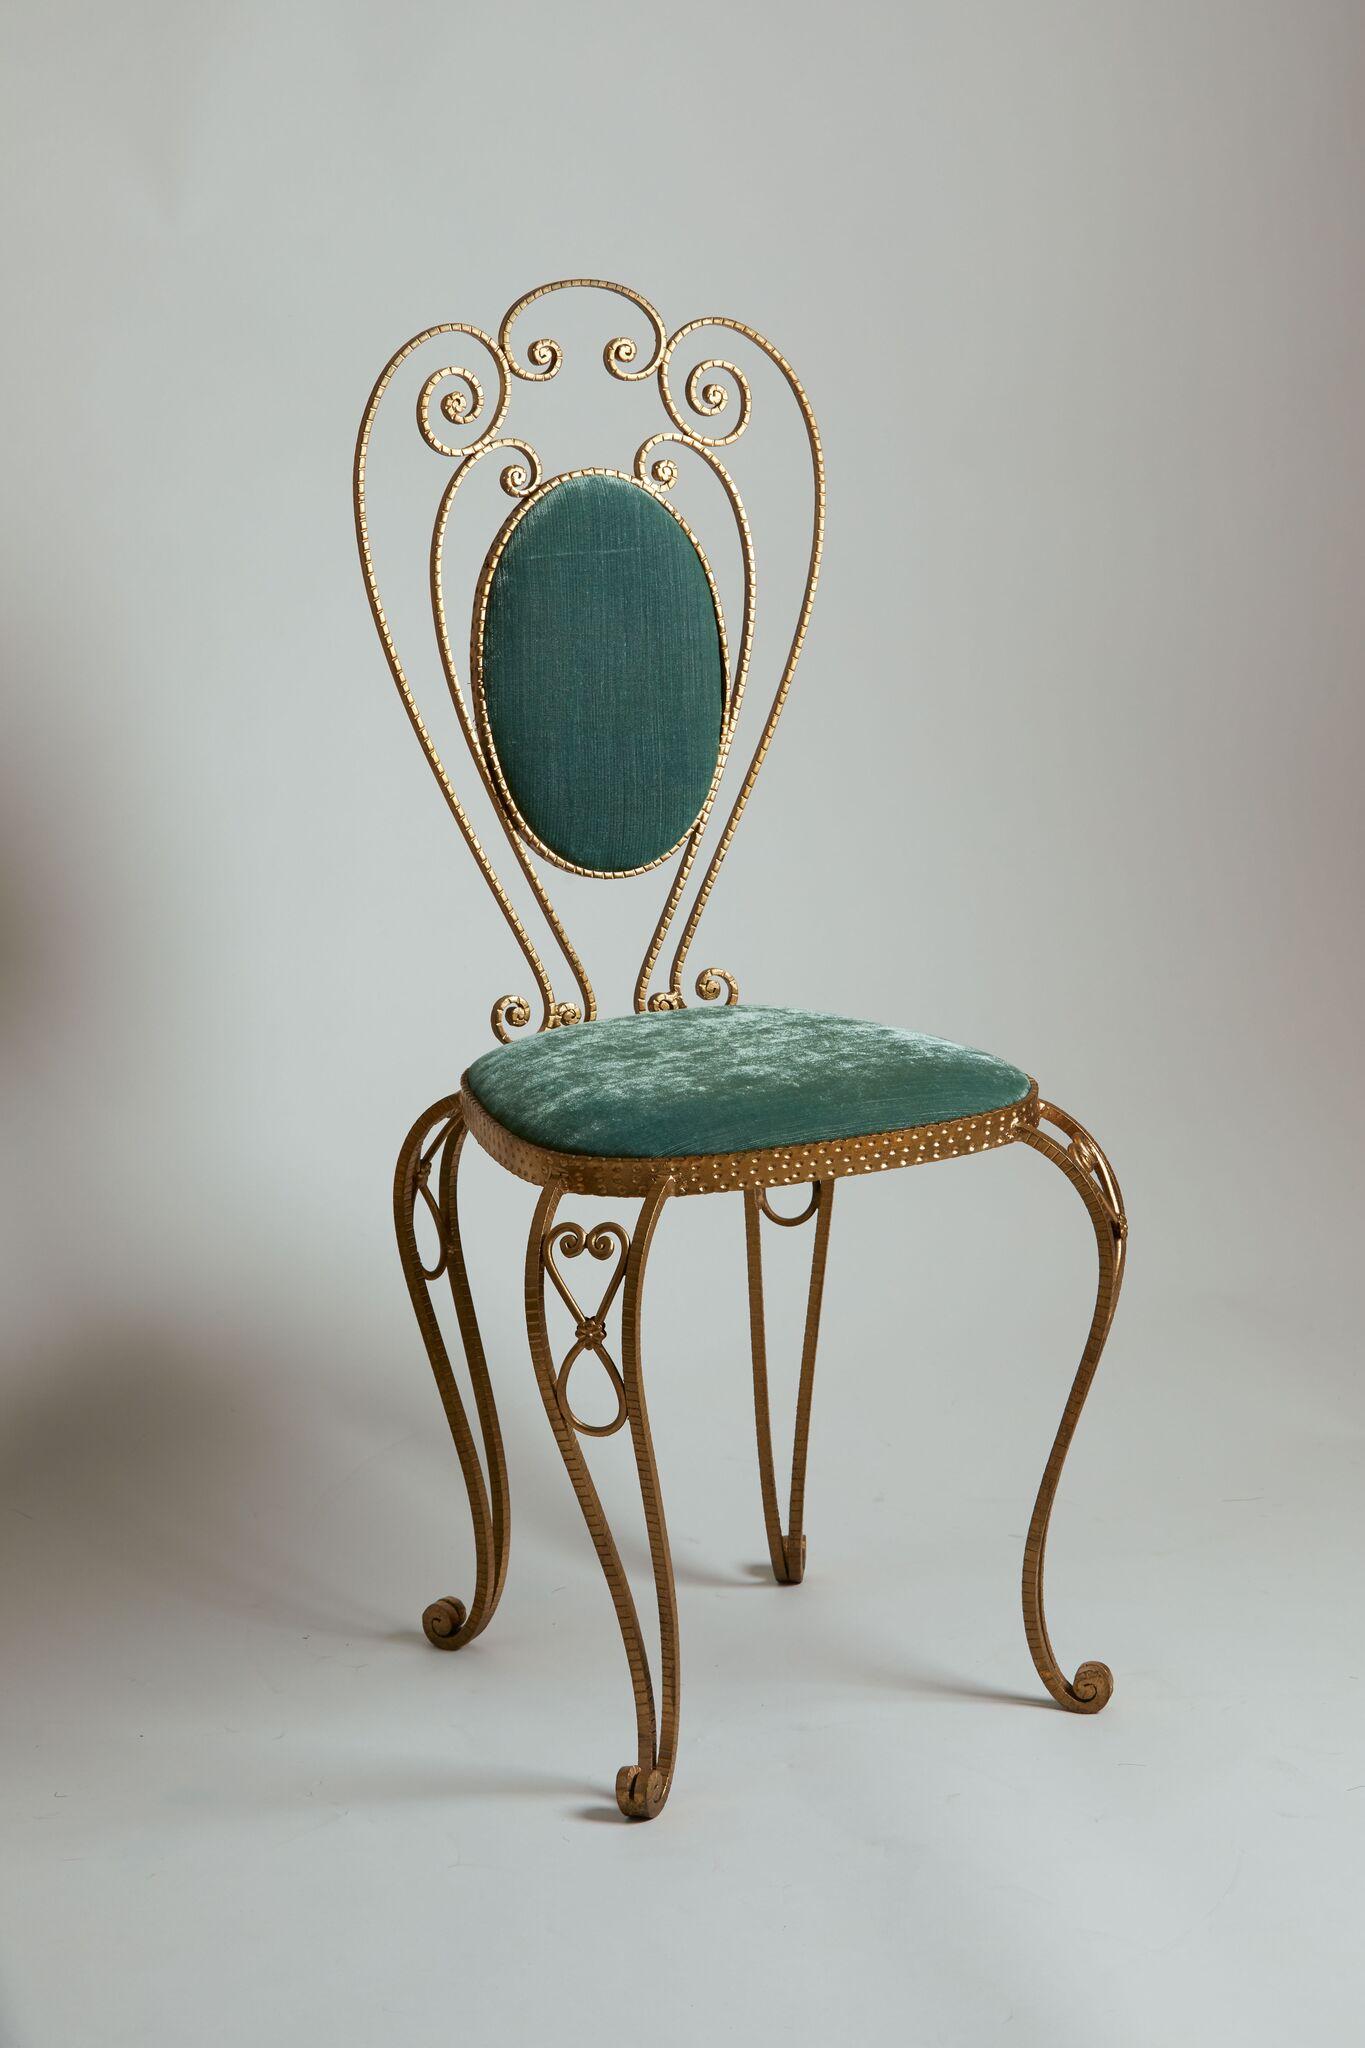 1970s Italy gold gilded vanity chair with green velvet upholstery (2).